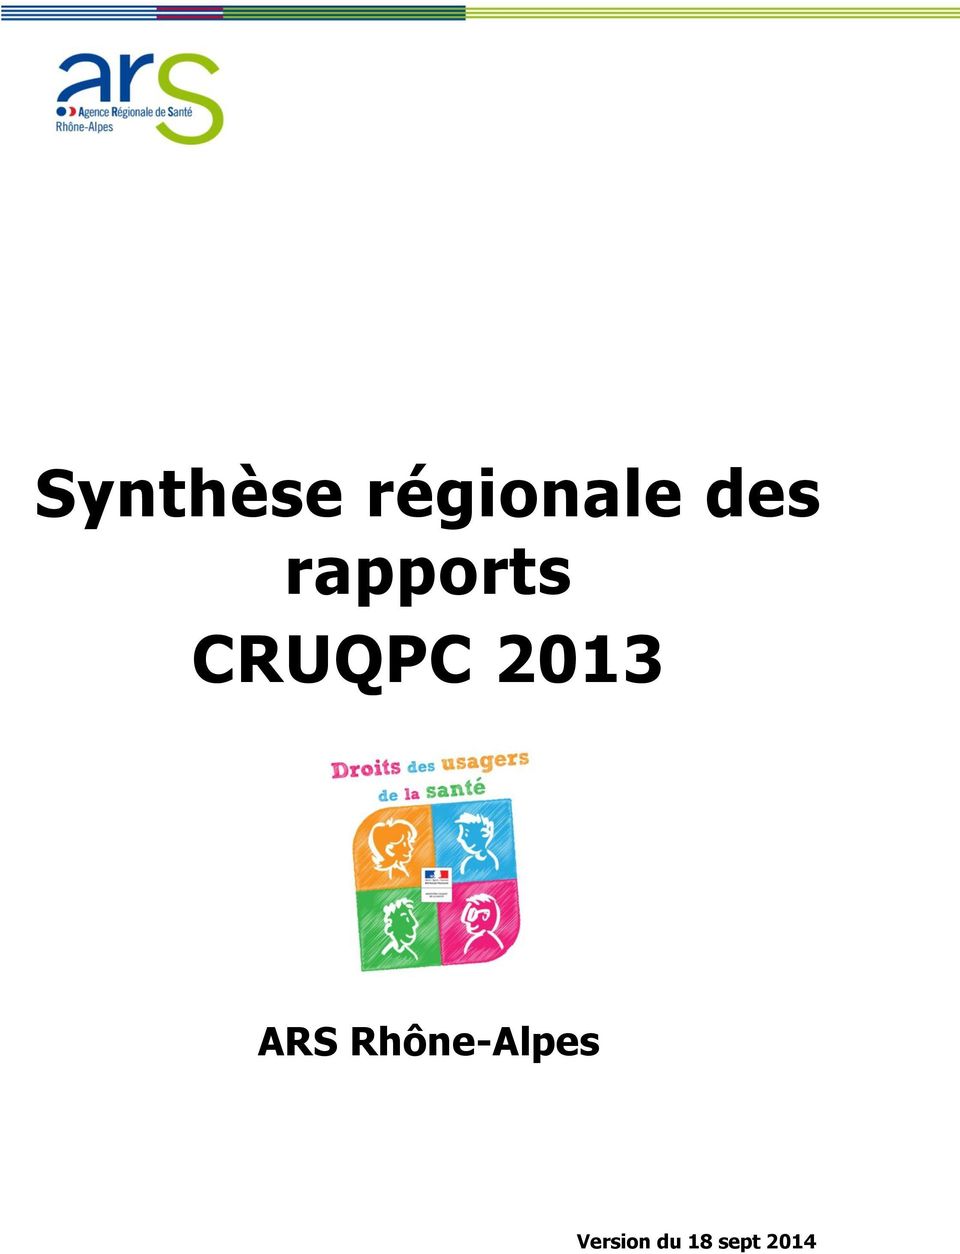 2013 ARS Rhône-Alpes